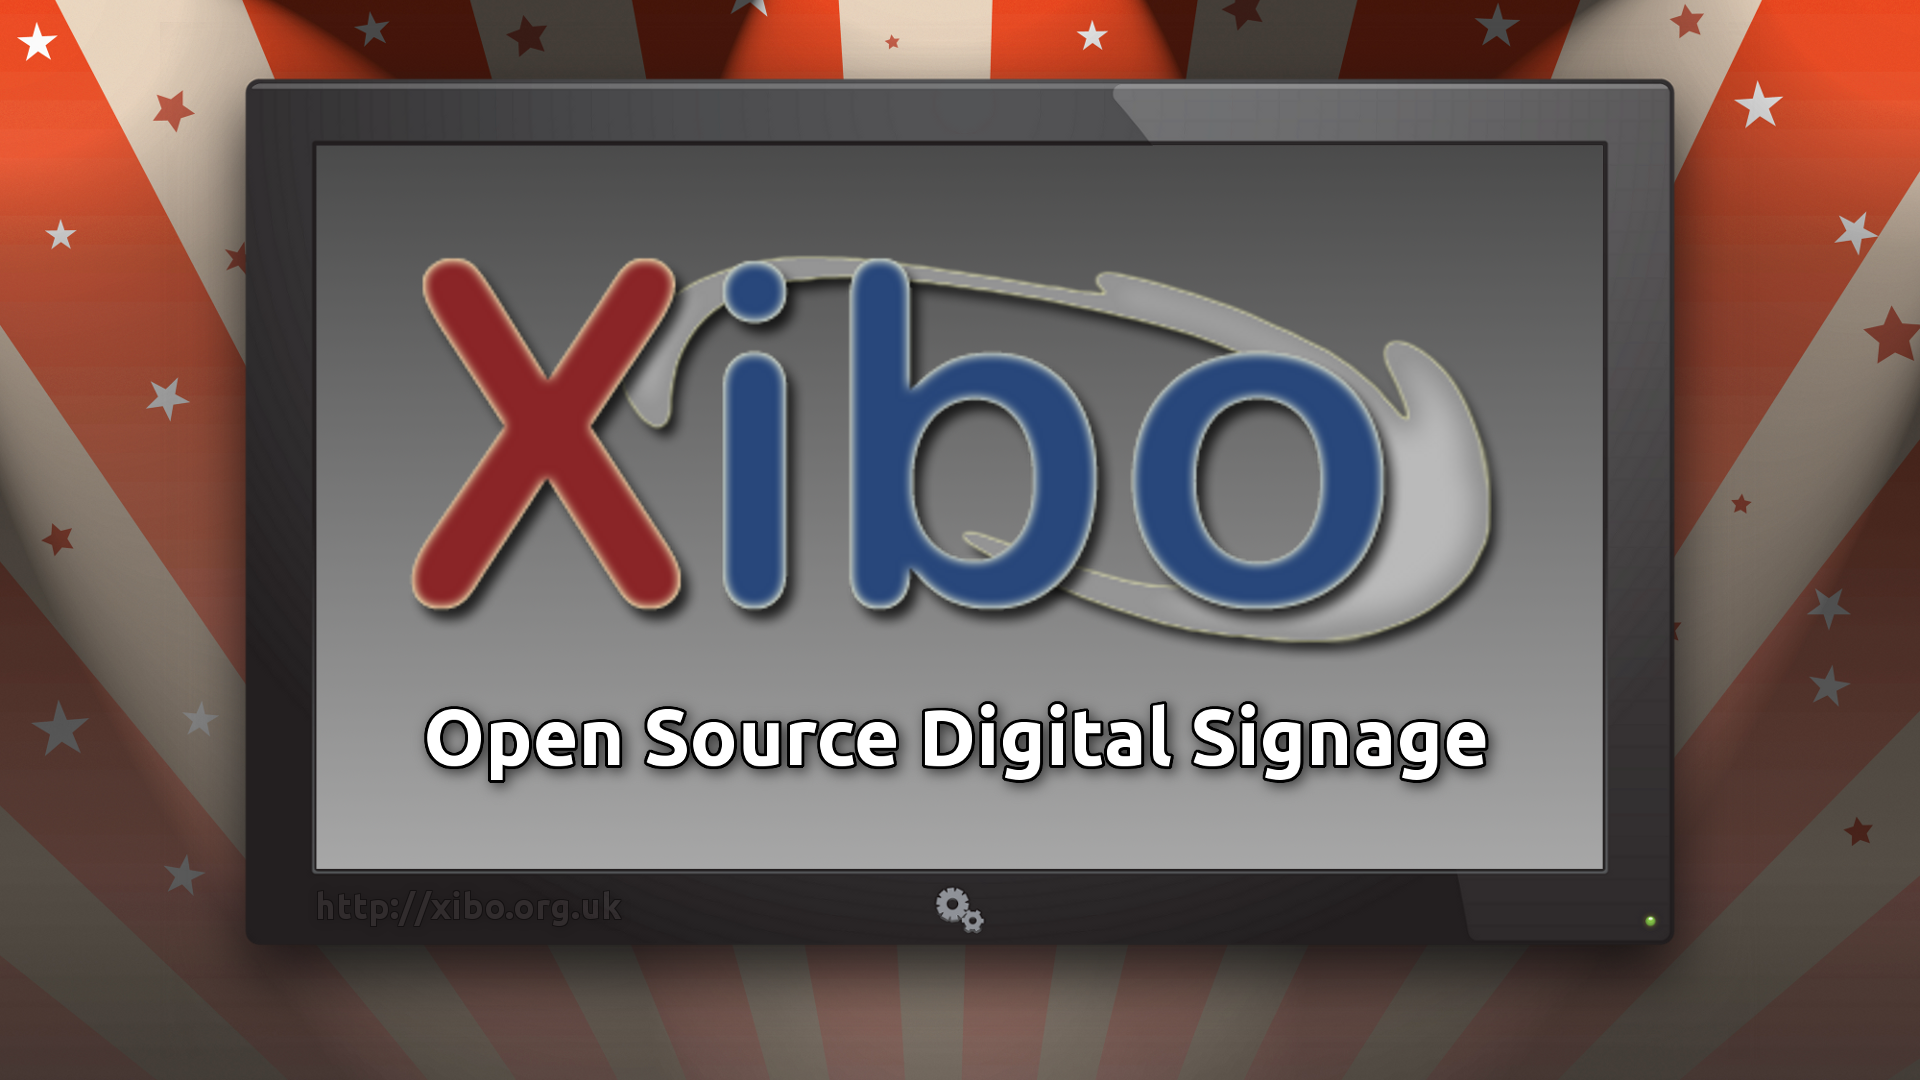 Xibo - Open Source Digital Signage